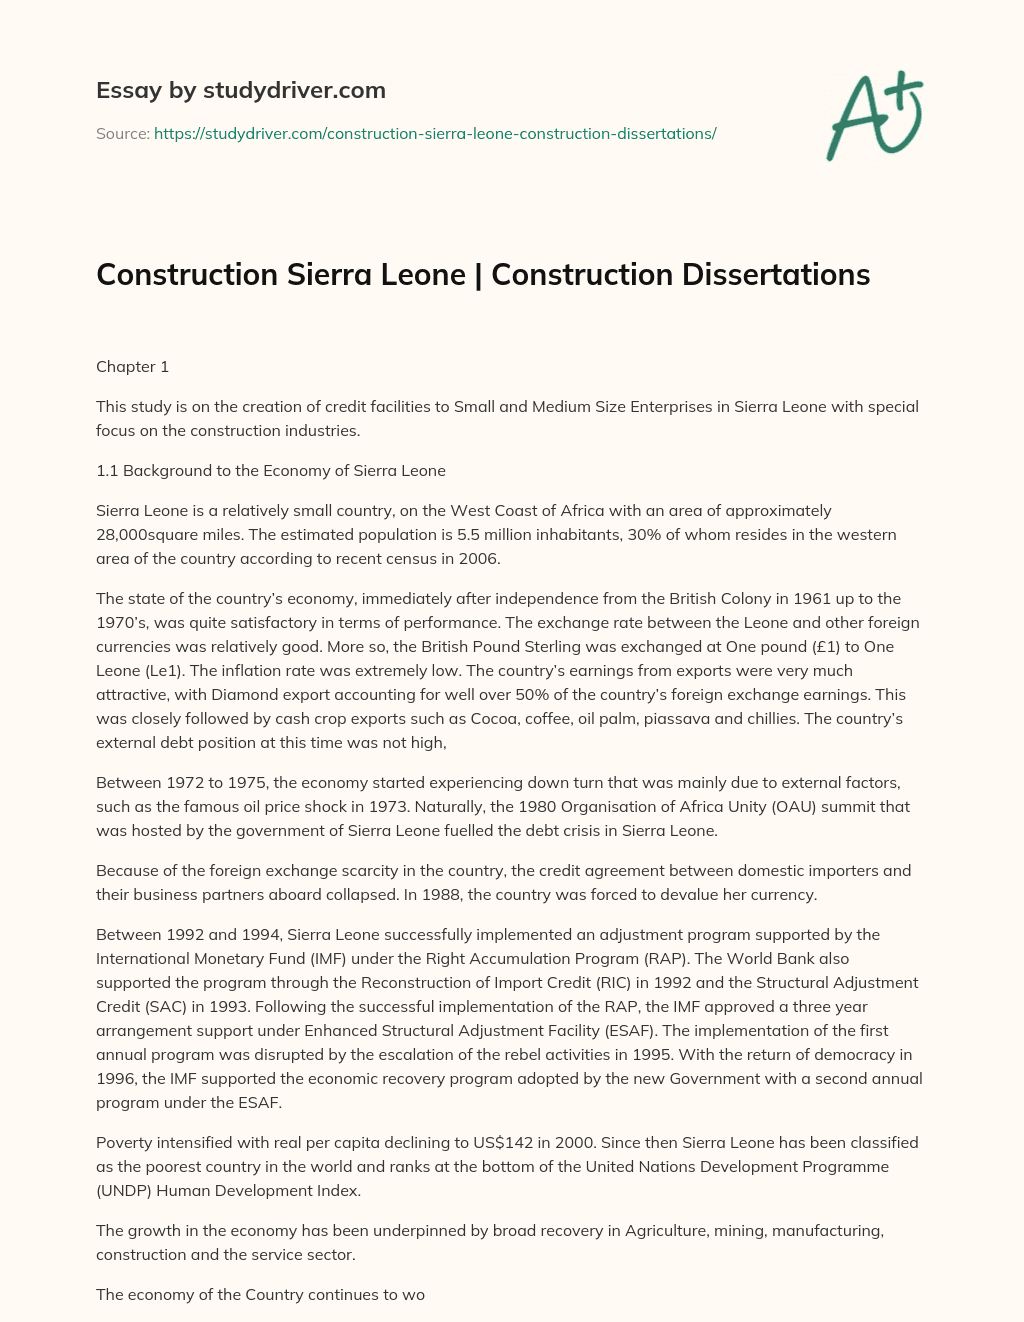 Construction Sierra Leone | Construction Dissertations essay